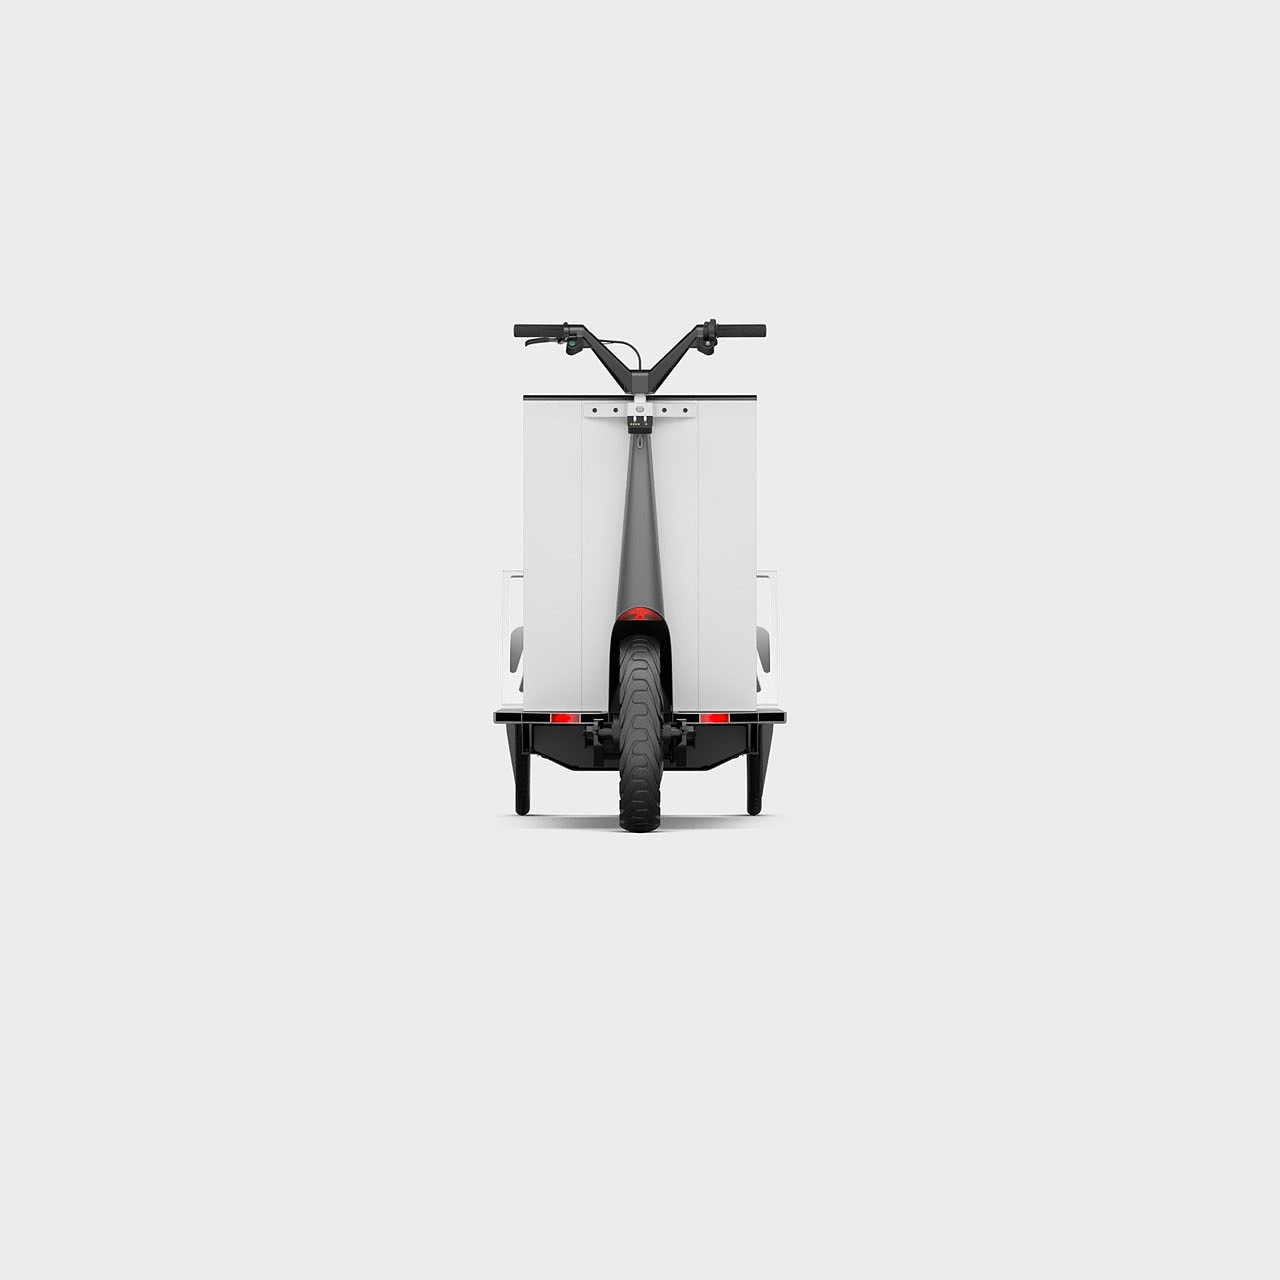 Polestar展示Re:Move 一辆可以在自行车道行驶的电动载具原型 - 1